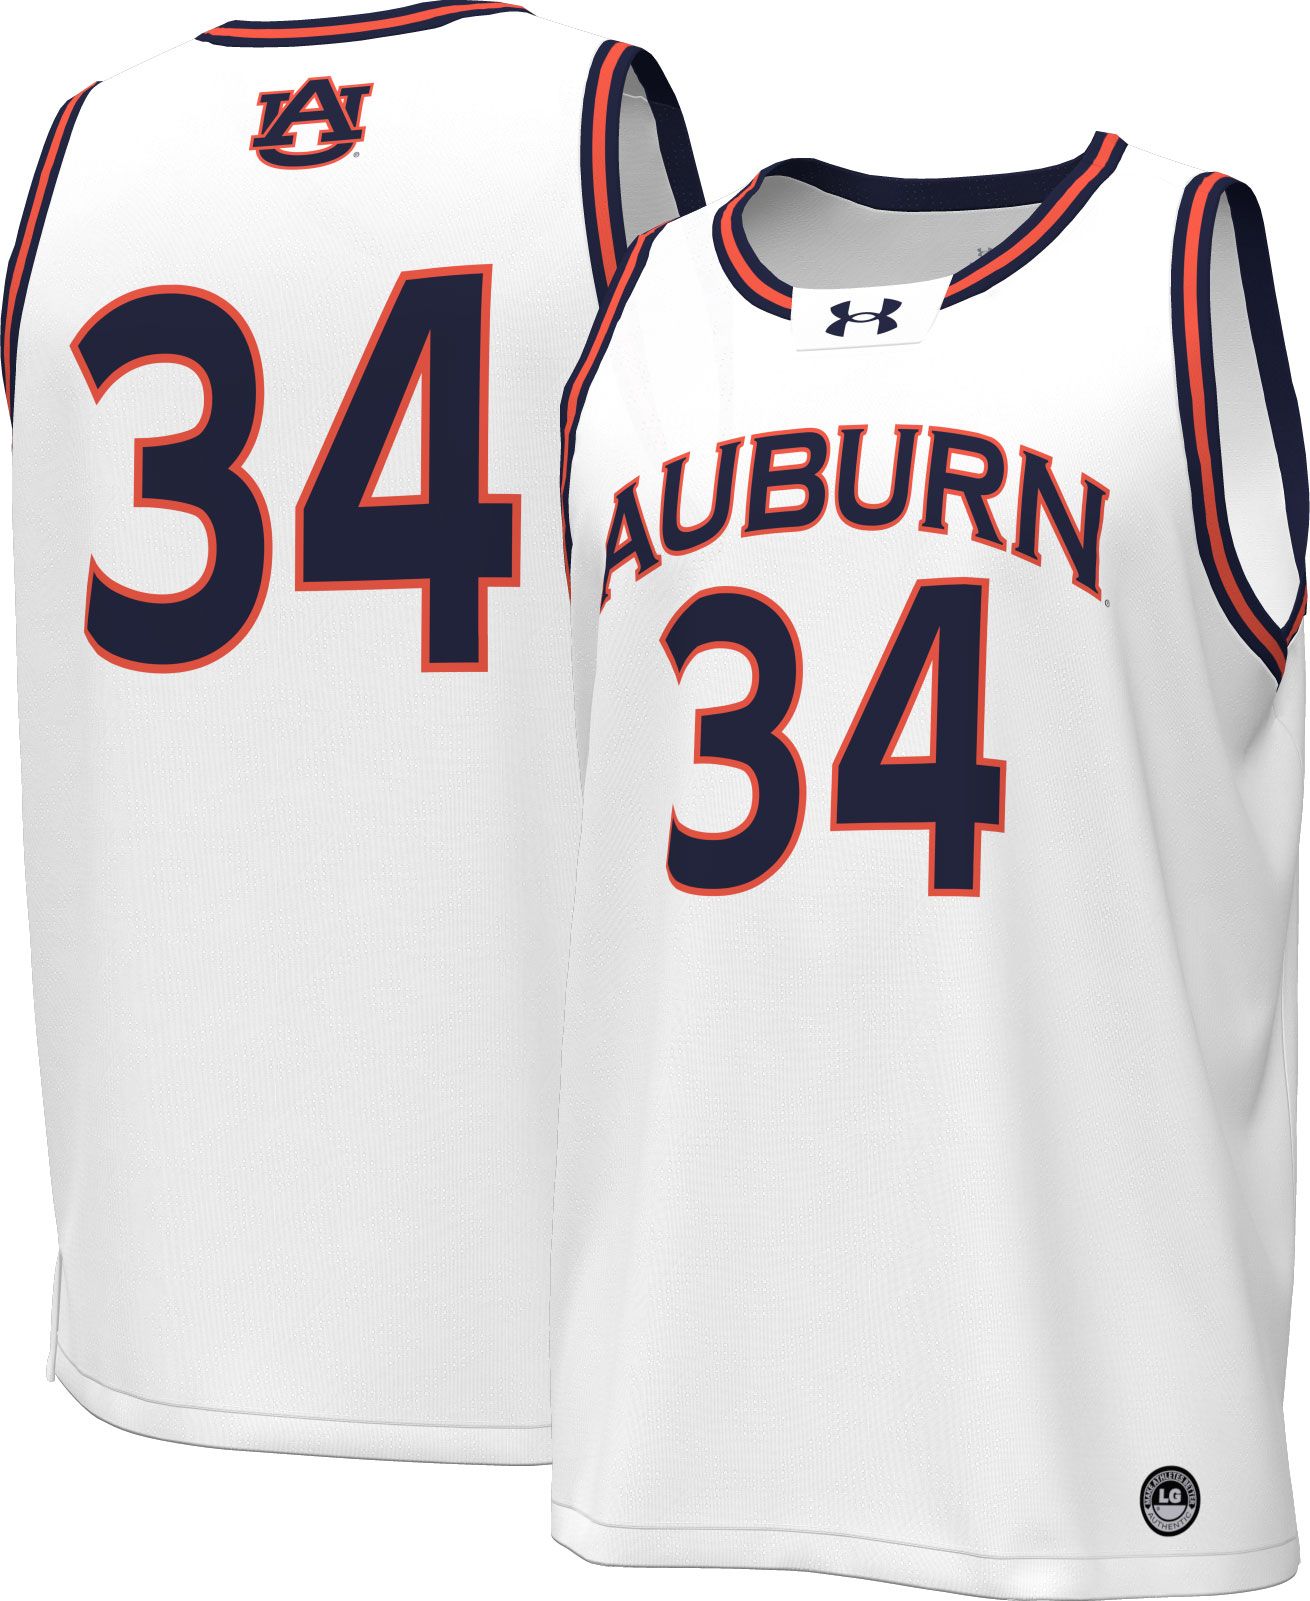 Under Armour Men's Auburn Tigers #34 White Replica Basketball Jersey